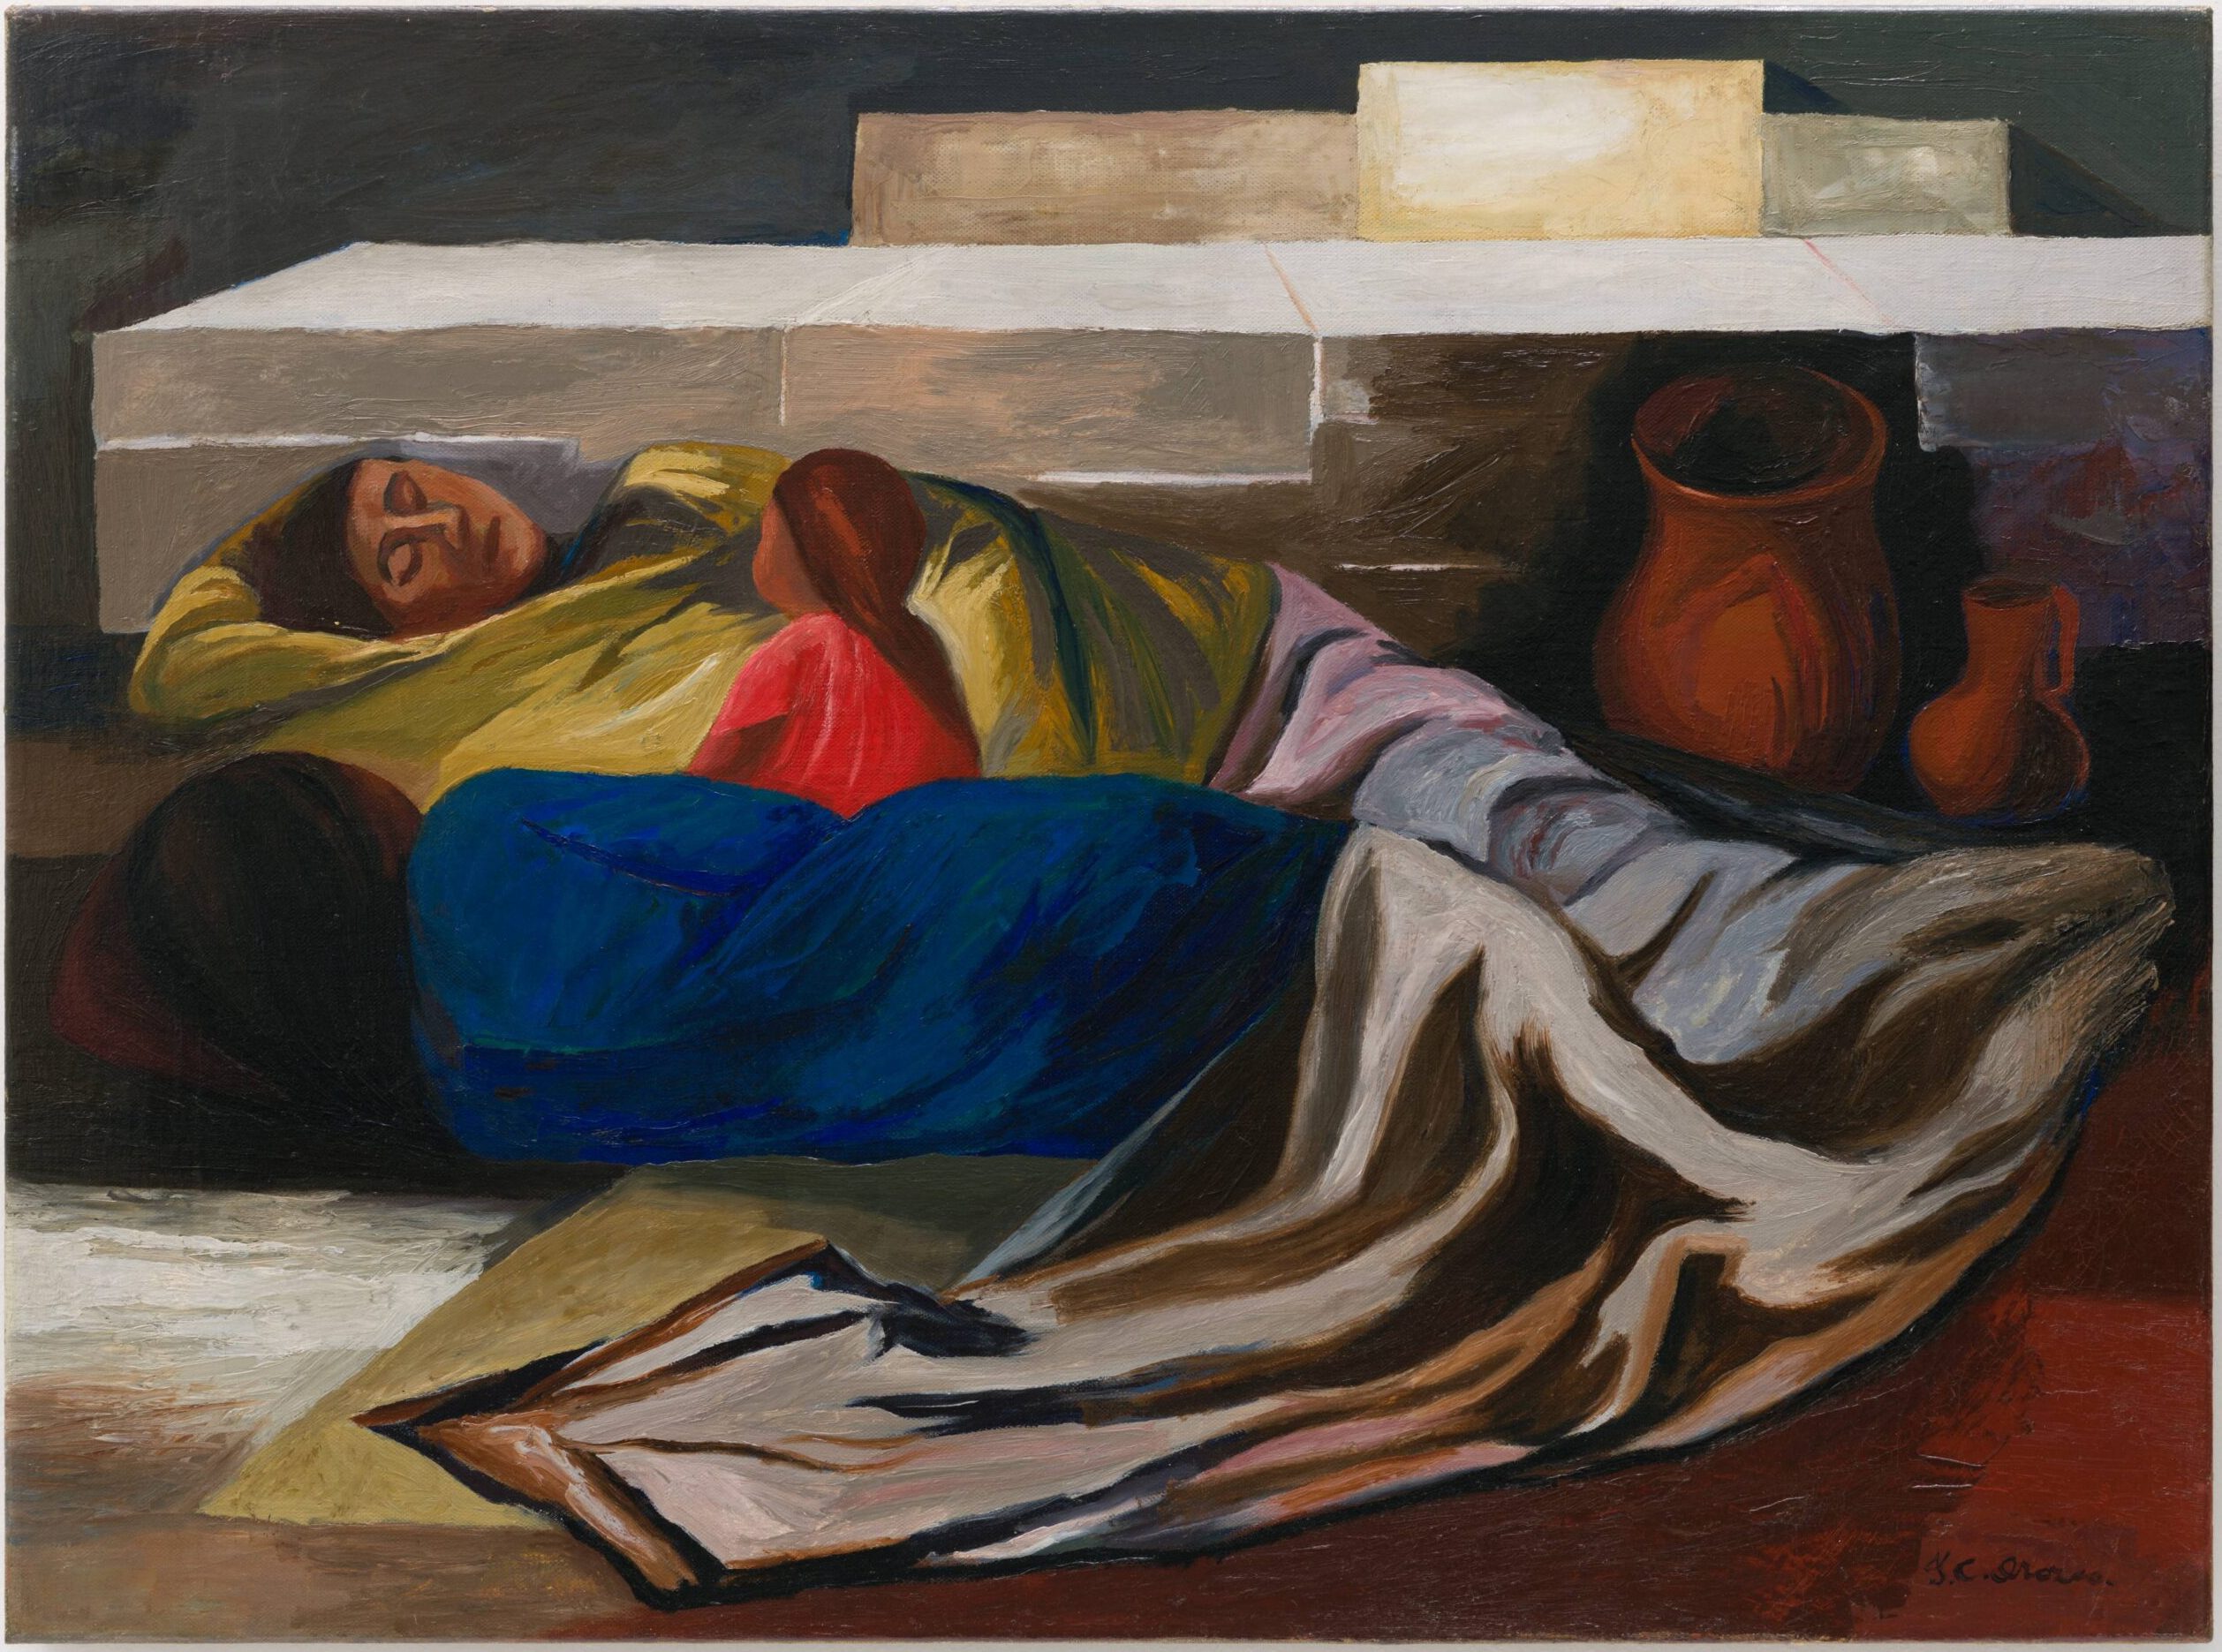 José Clemente Orozco. Sleeping (The Family). 1930